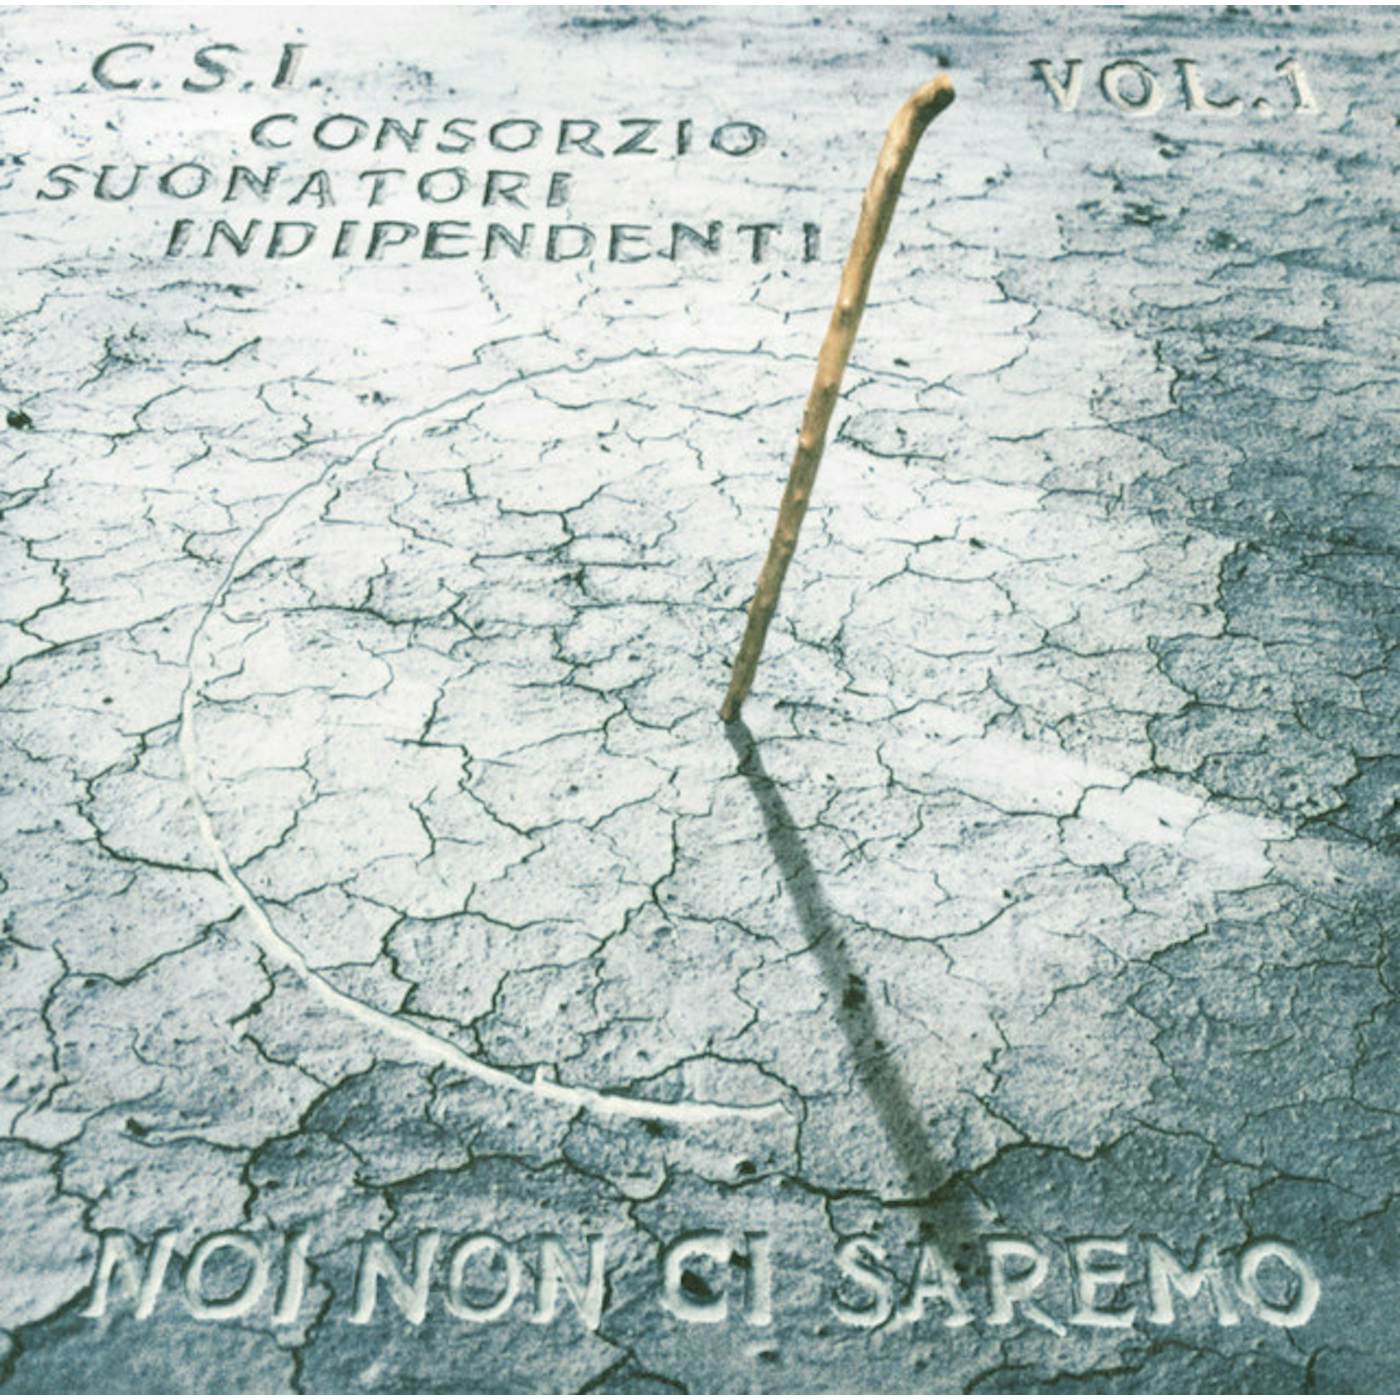 C.S.I. NOI NON CI SAREMO (VOL 1) CD